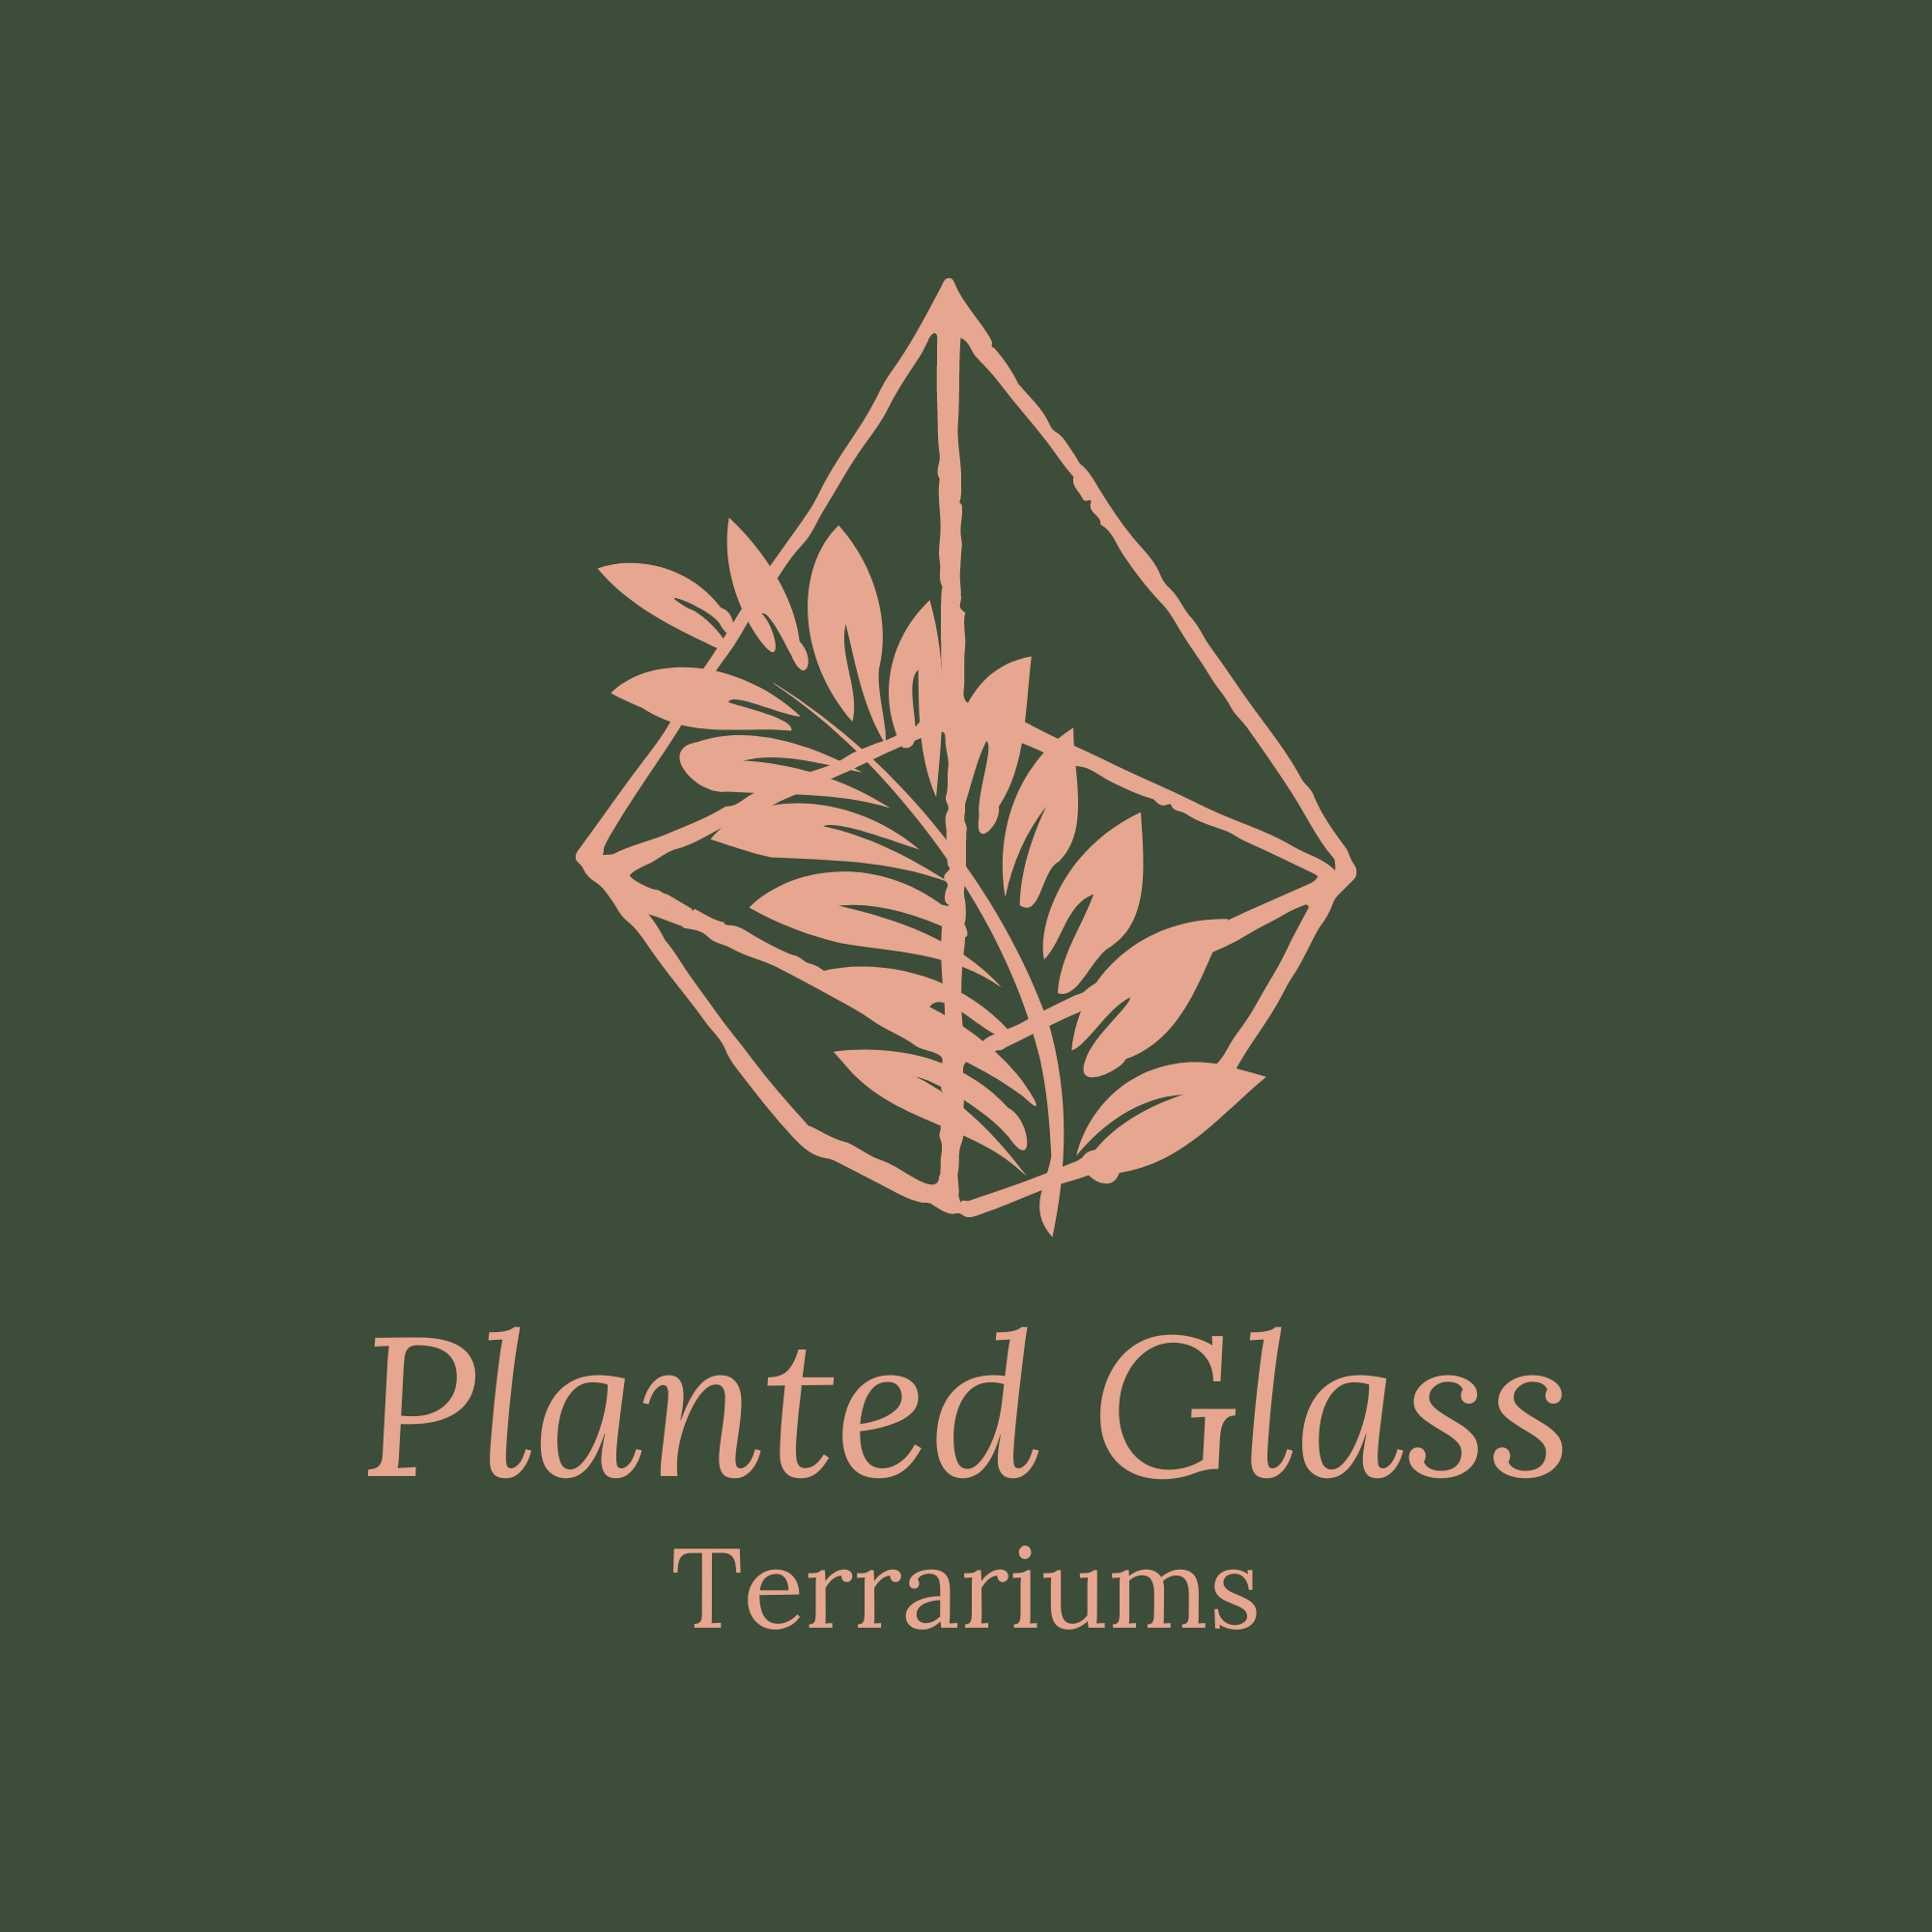 Planted Glass Terrariums